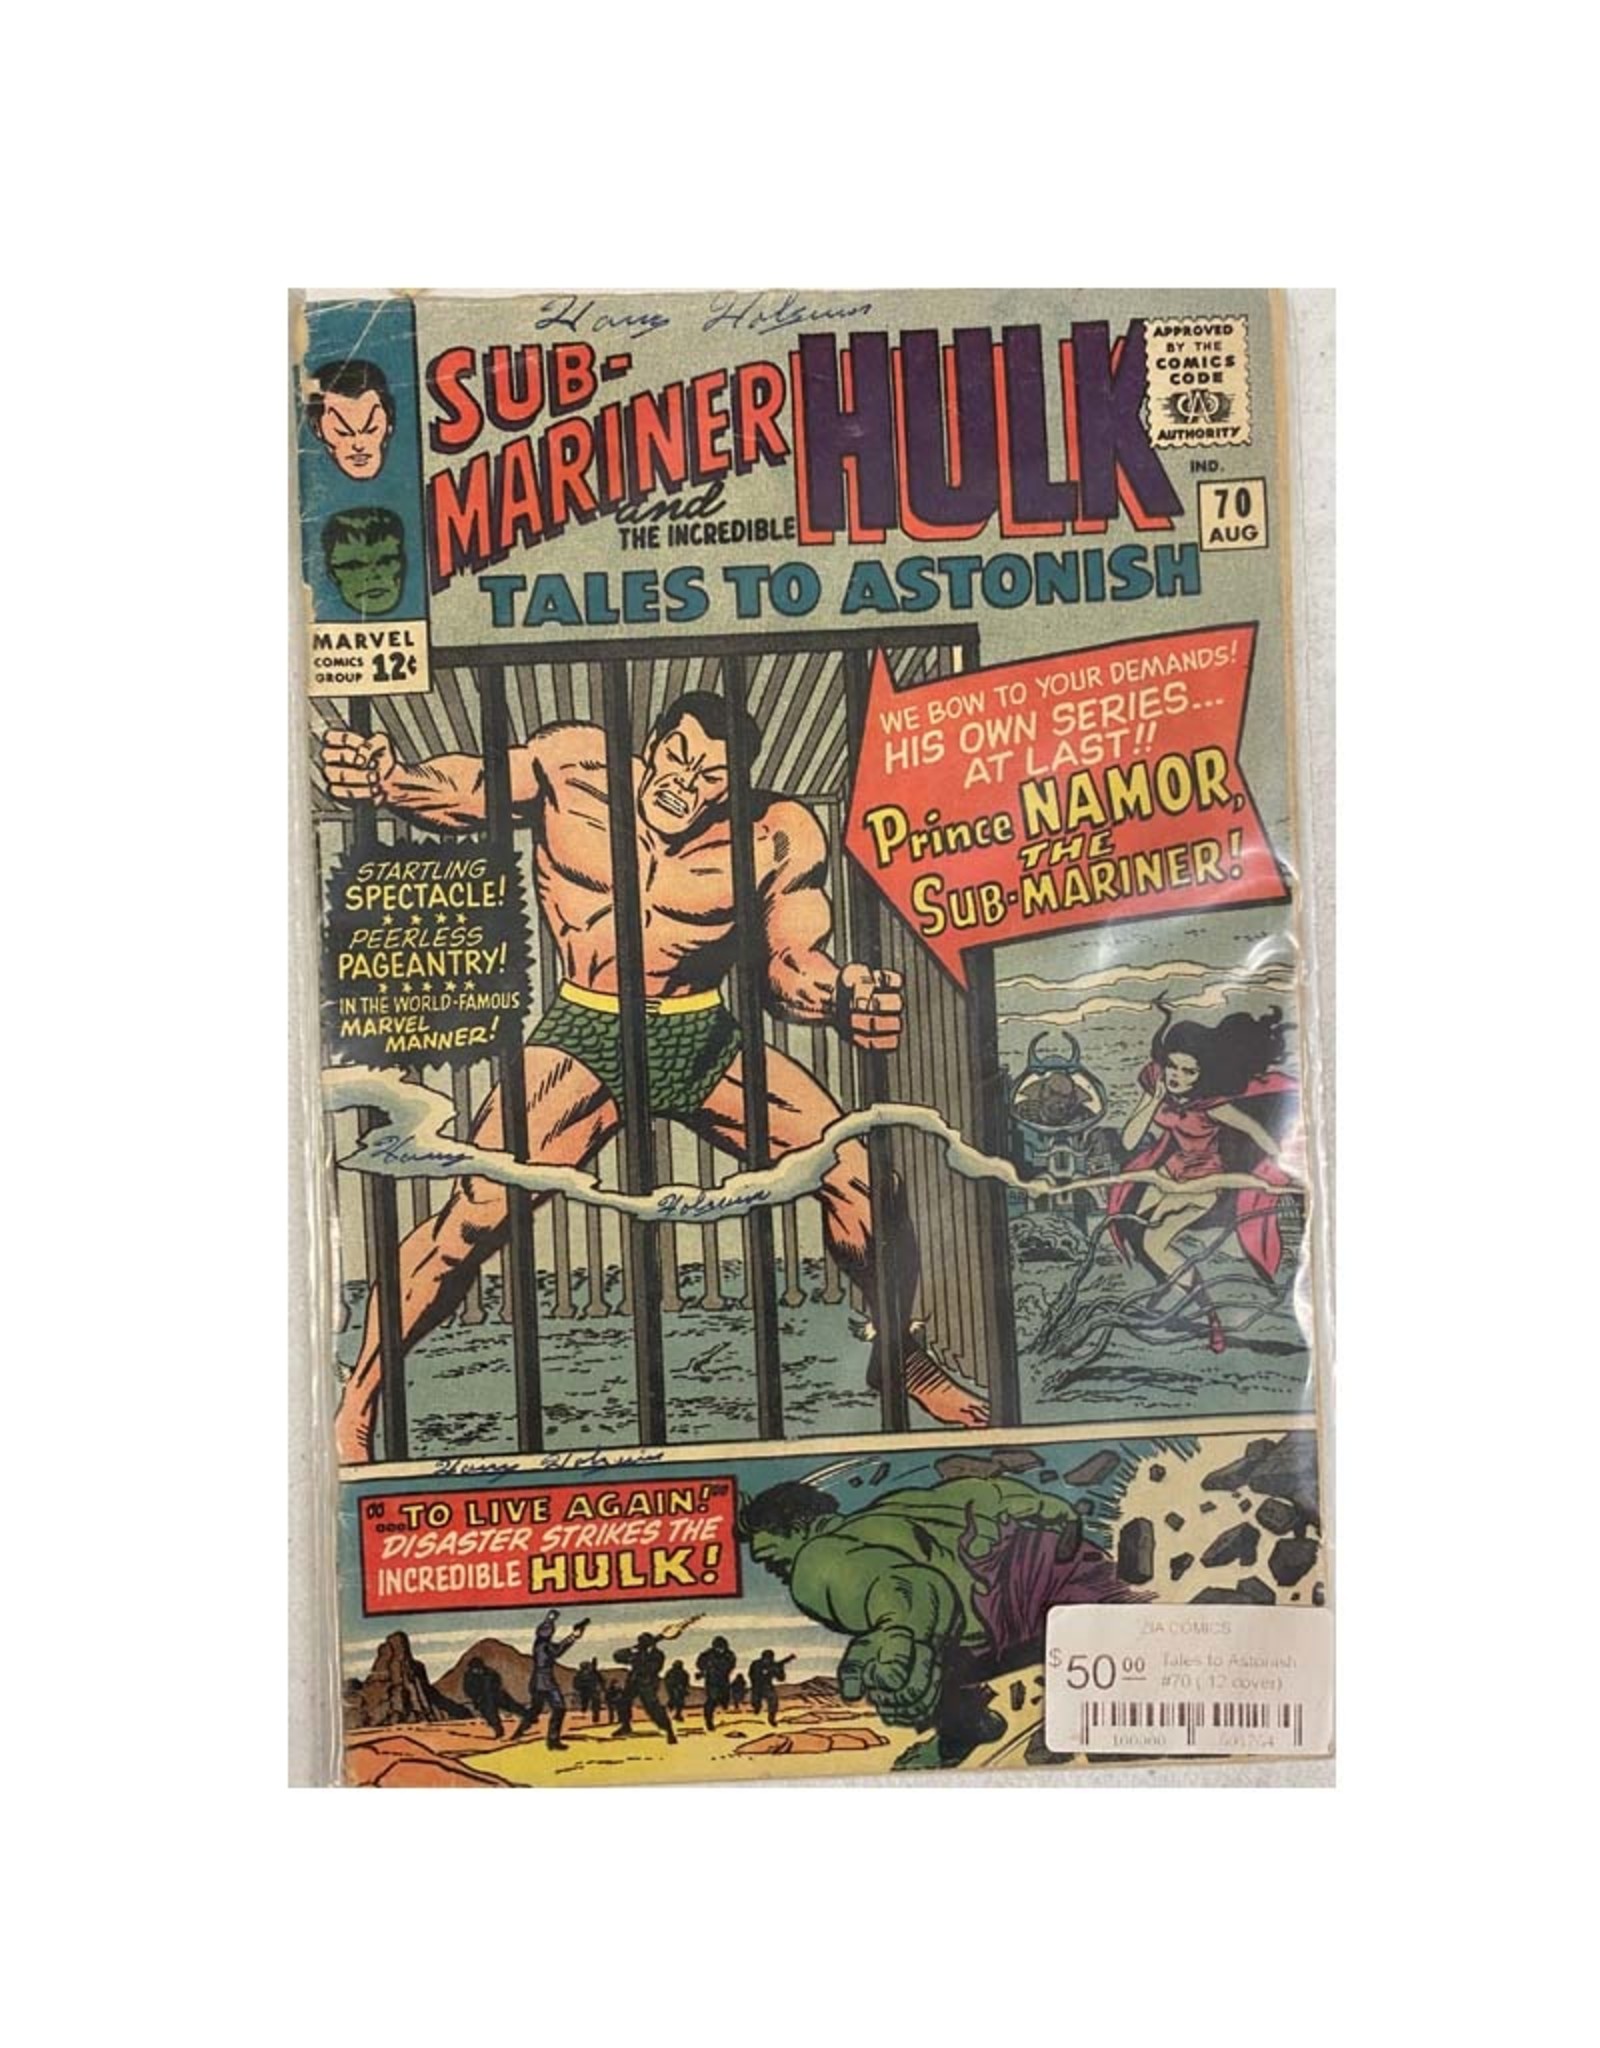 Marvel Comics Tales to Astonish #70 (.12 cover)